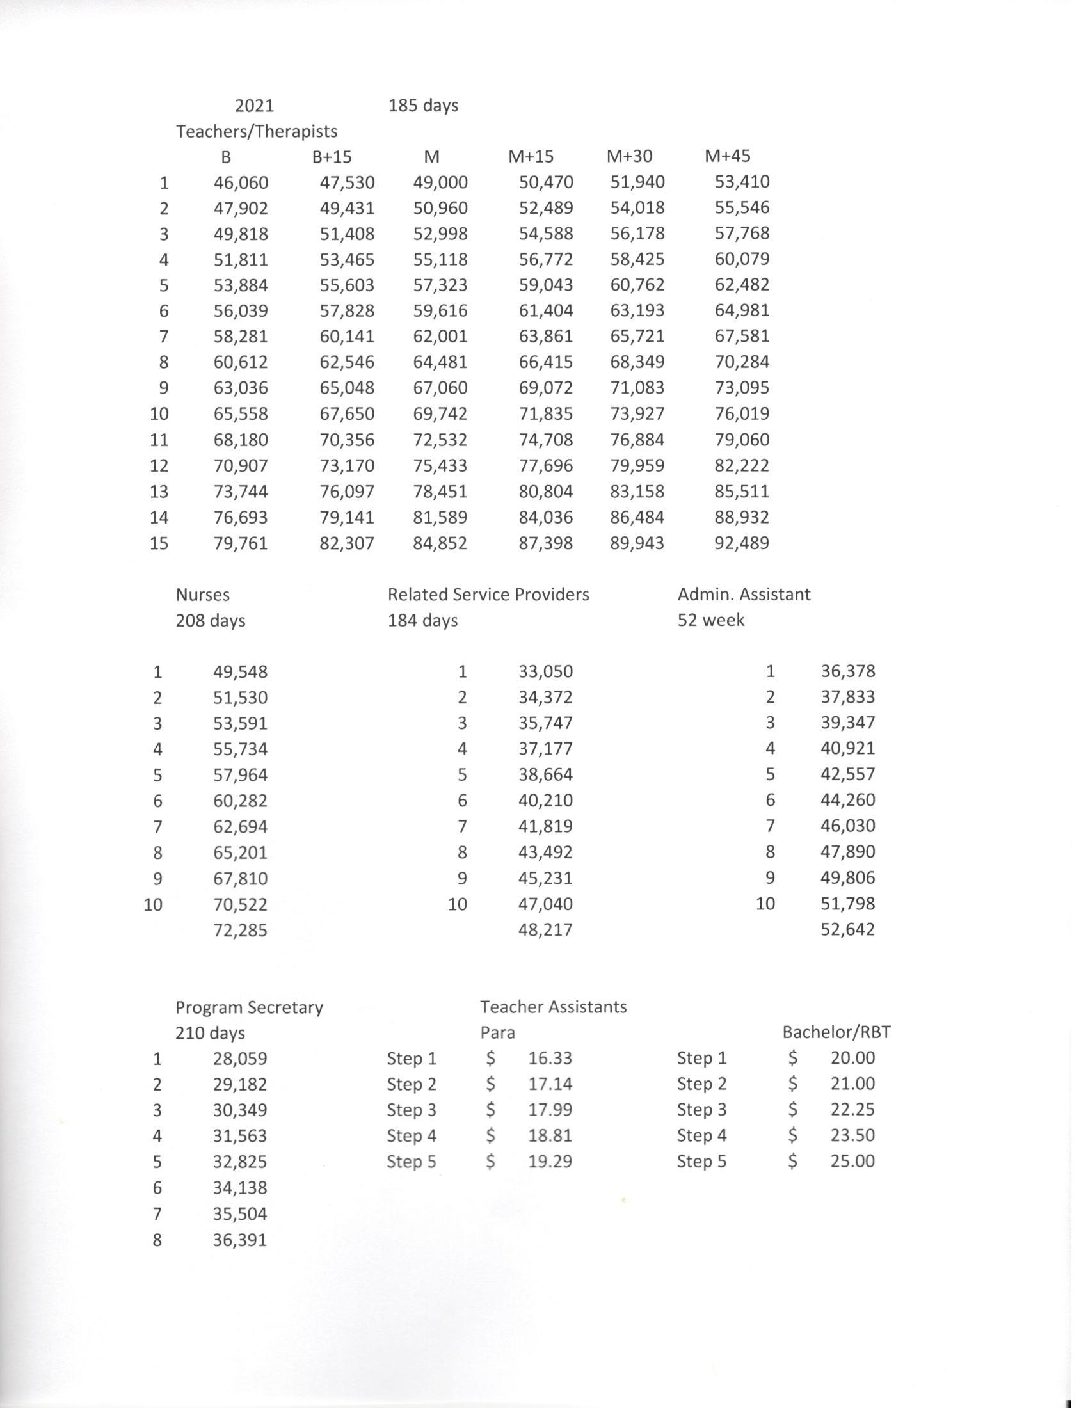 Pyry Eskola - Stats, Contract, Salary & More